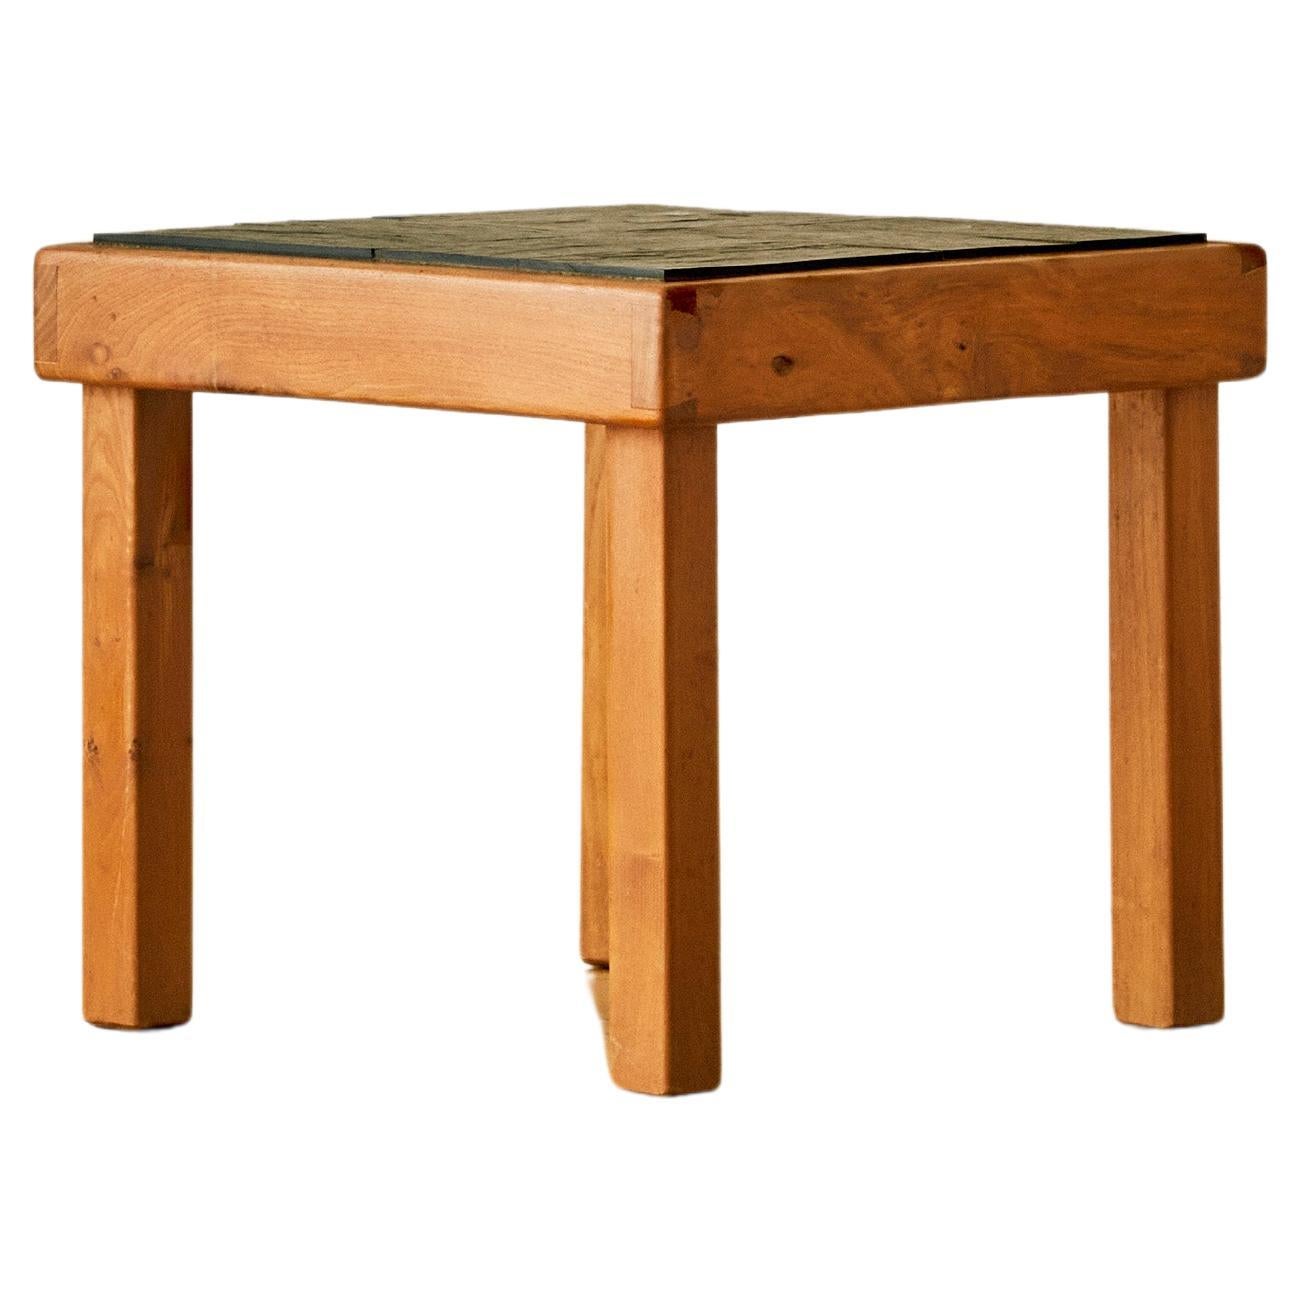 Elm side table by Pierre Chapo for Maison Regain For Sale